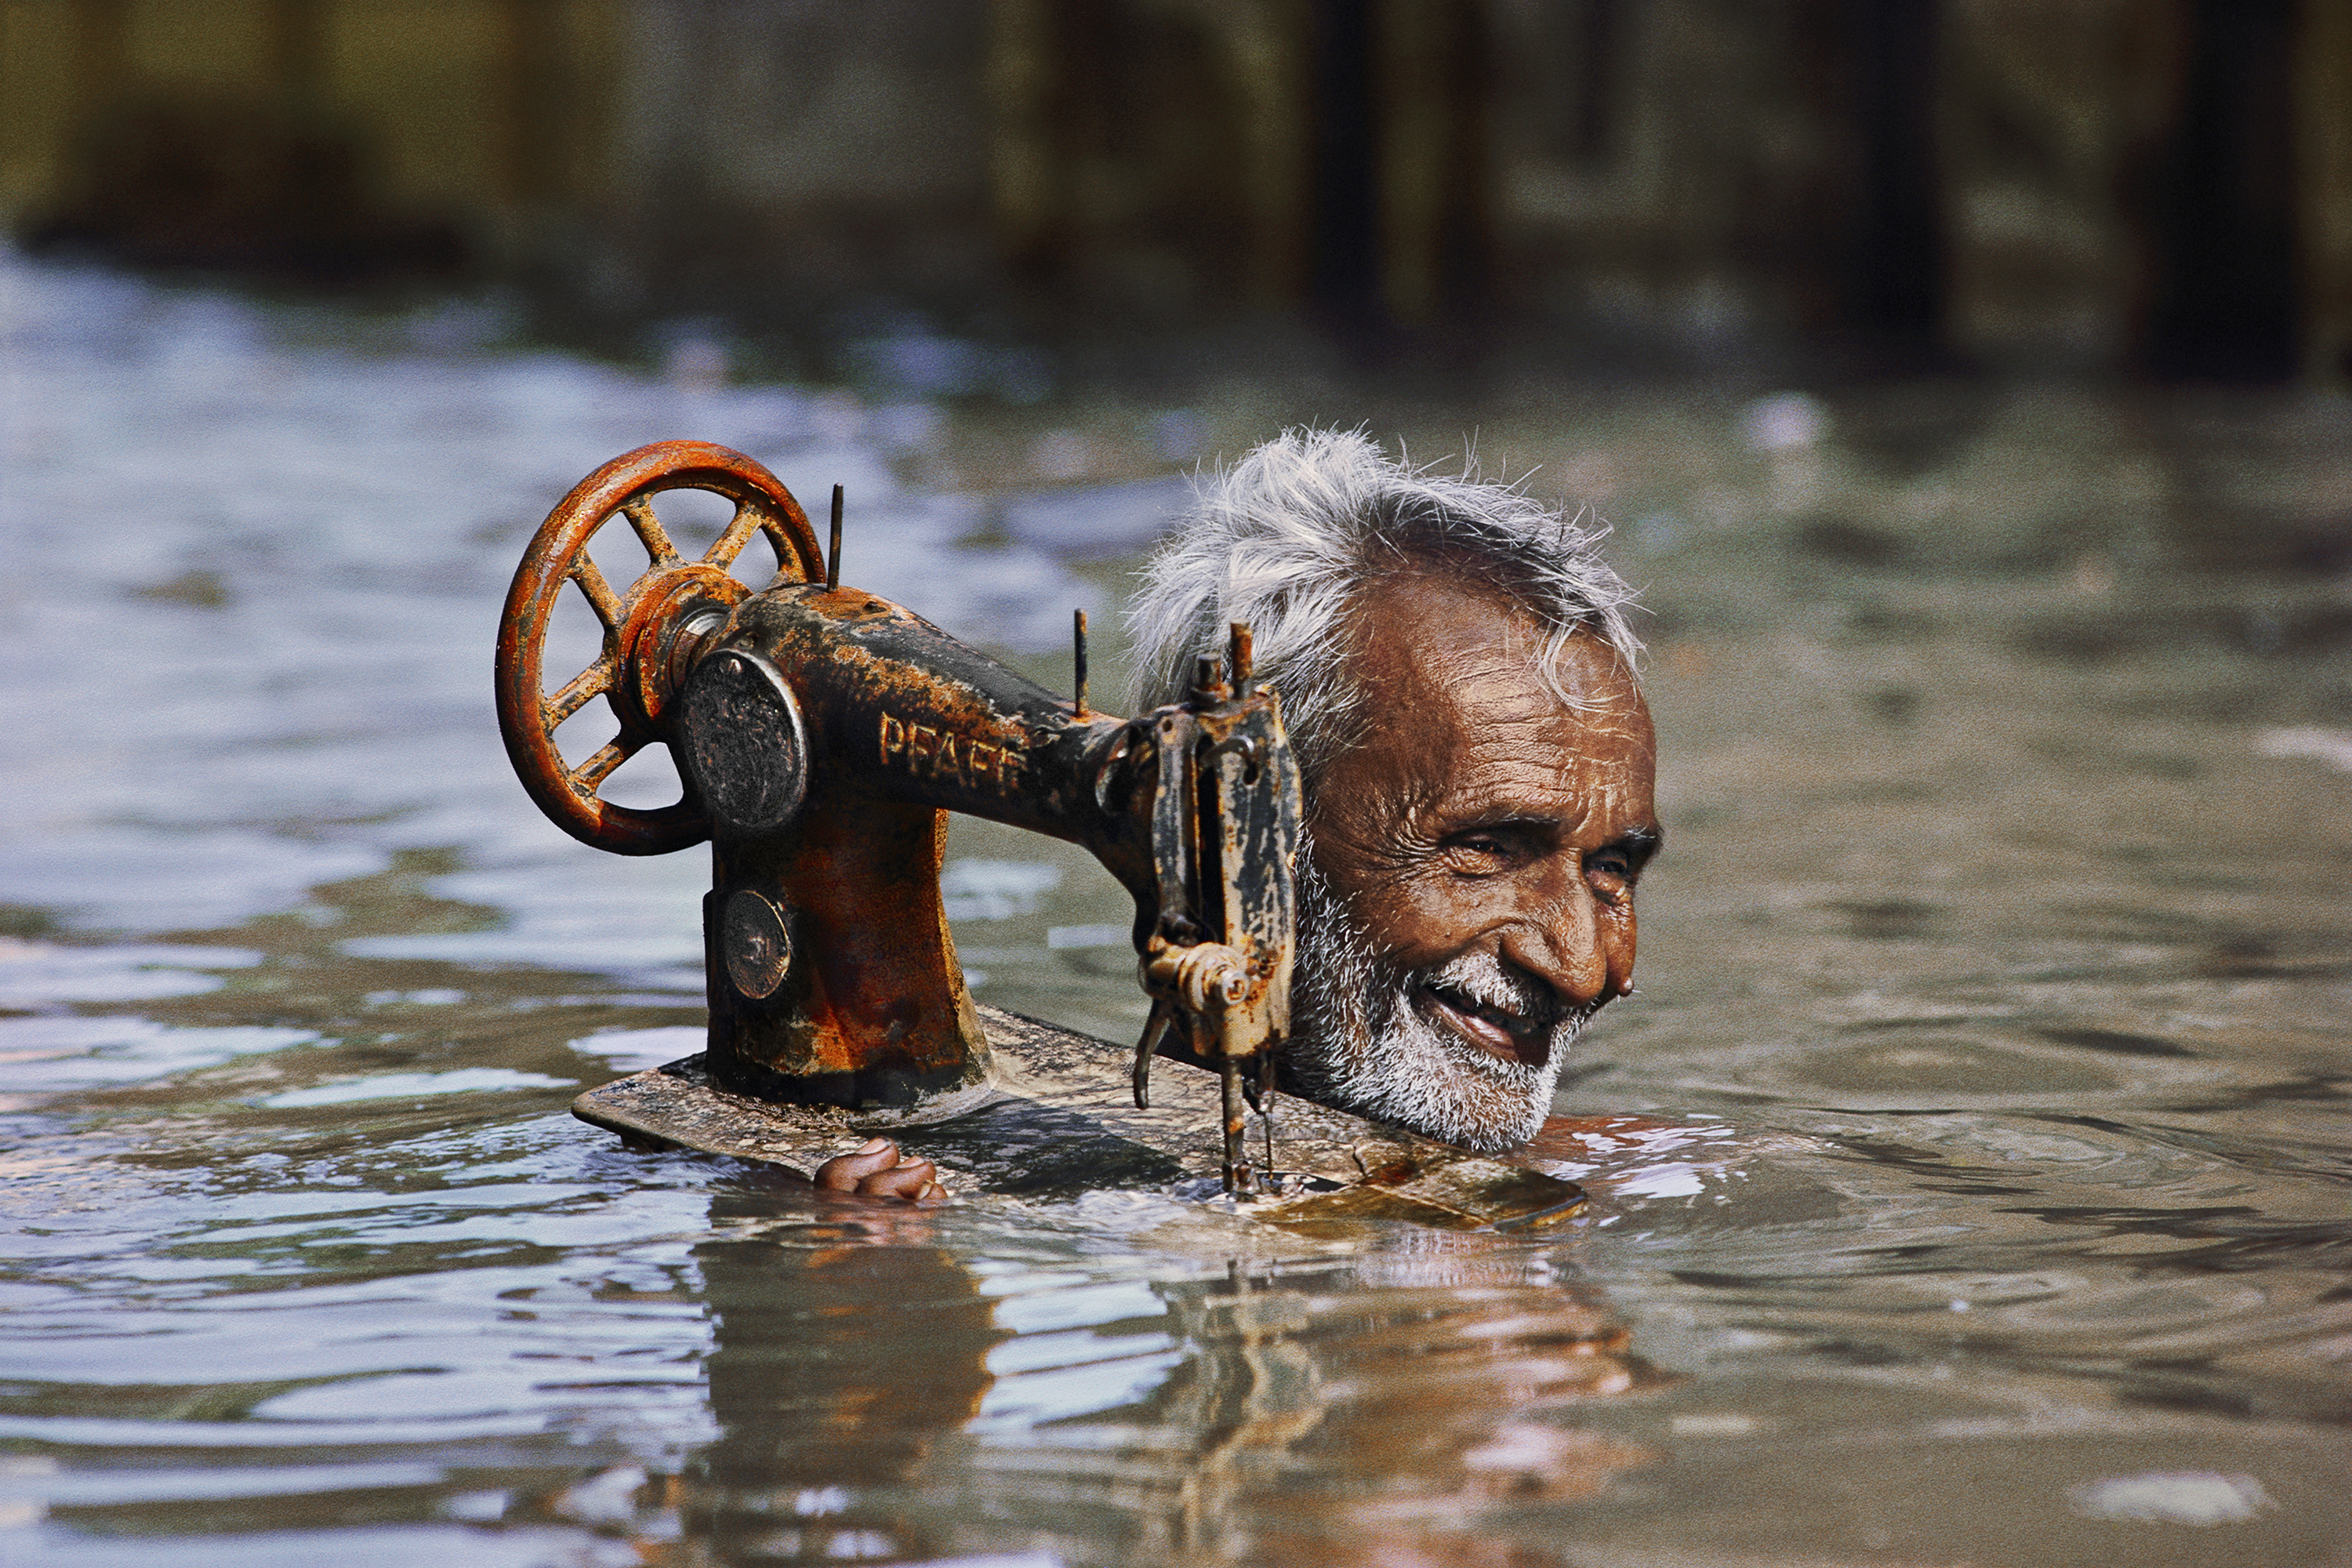 Steve McCurry's monsoon photos from India & beyond – Devastatingly